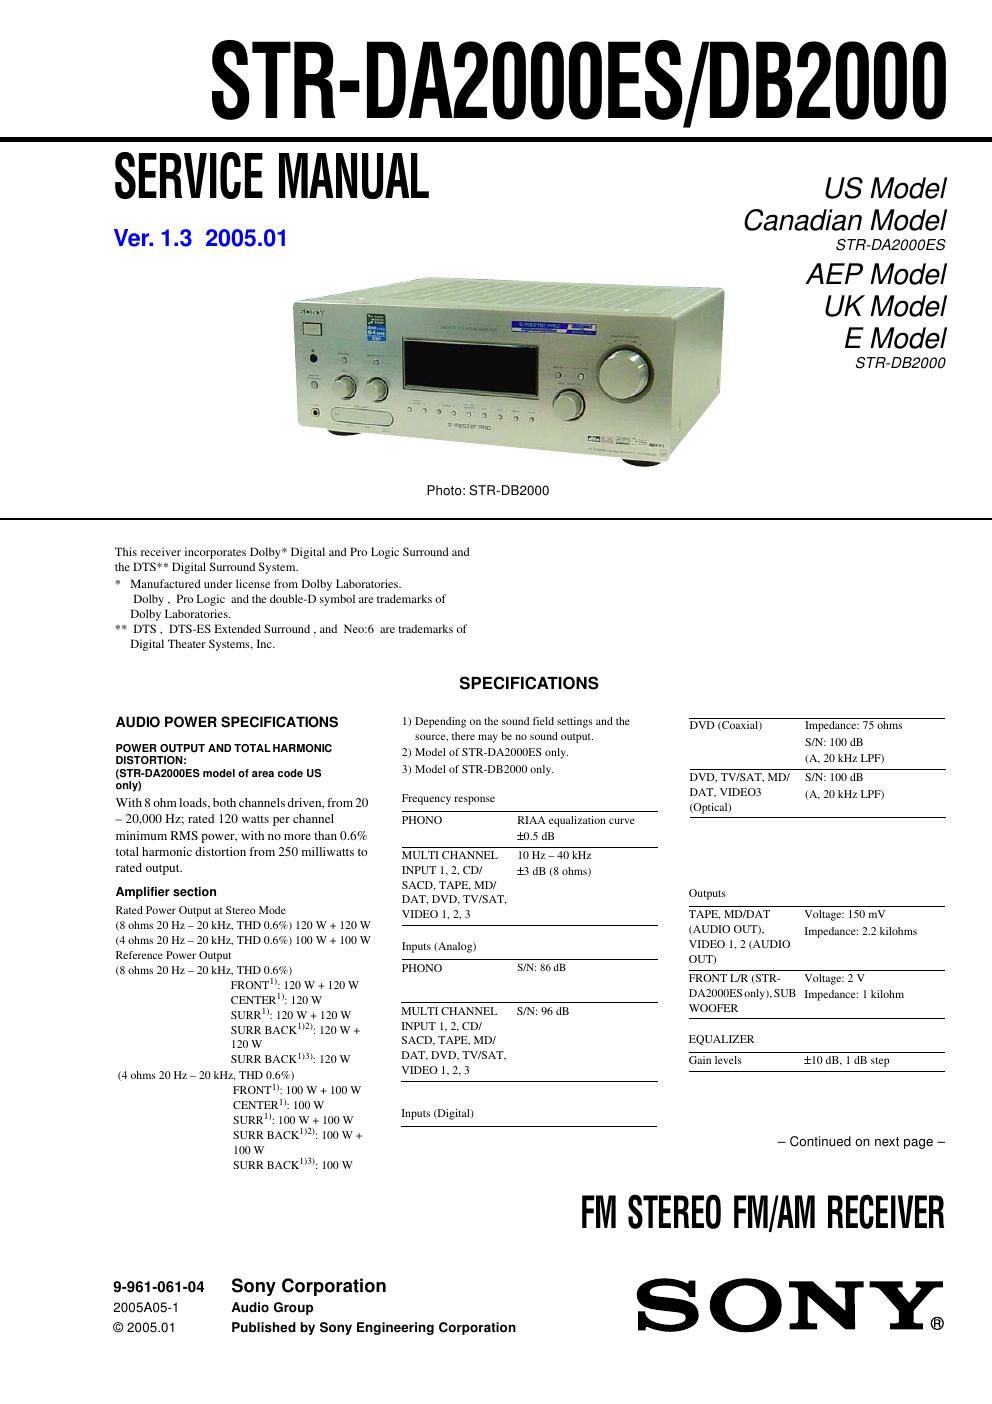 sony str db 2000 service manual